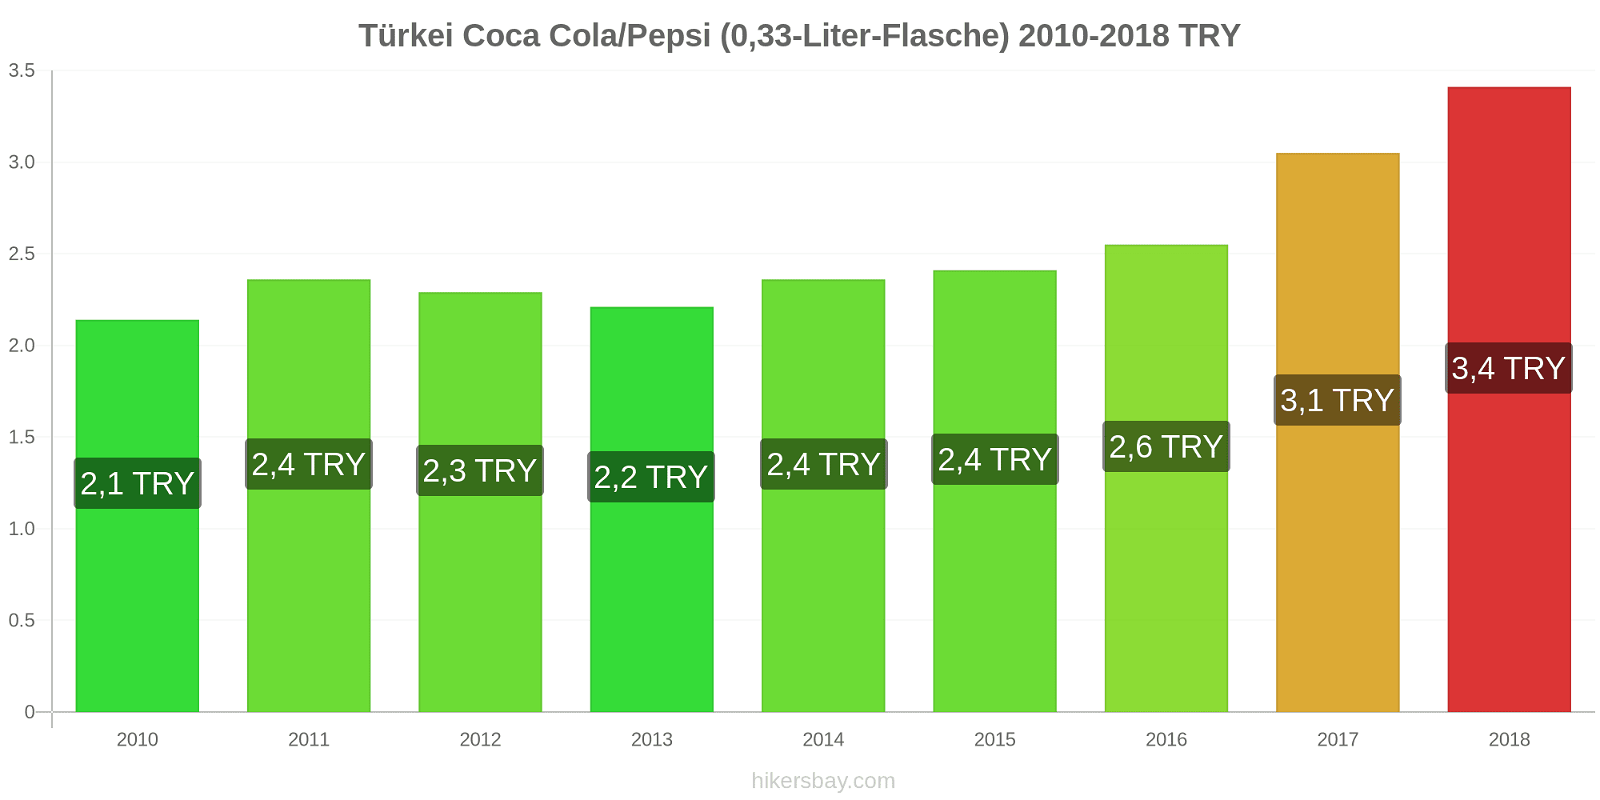 Türkei Preisänderungen Coke/Pepsi (0,33-Liter-Flasche) hikersbay.com